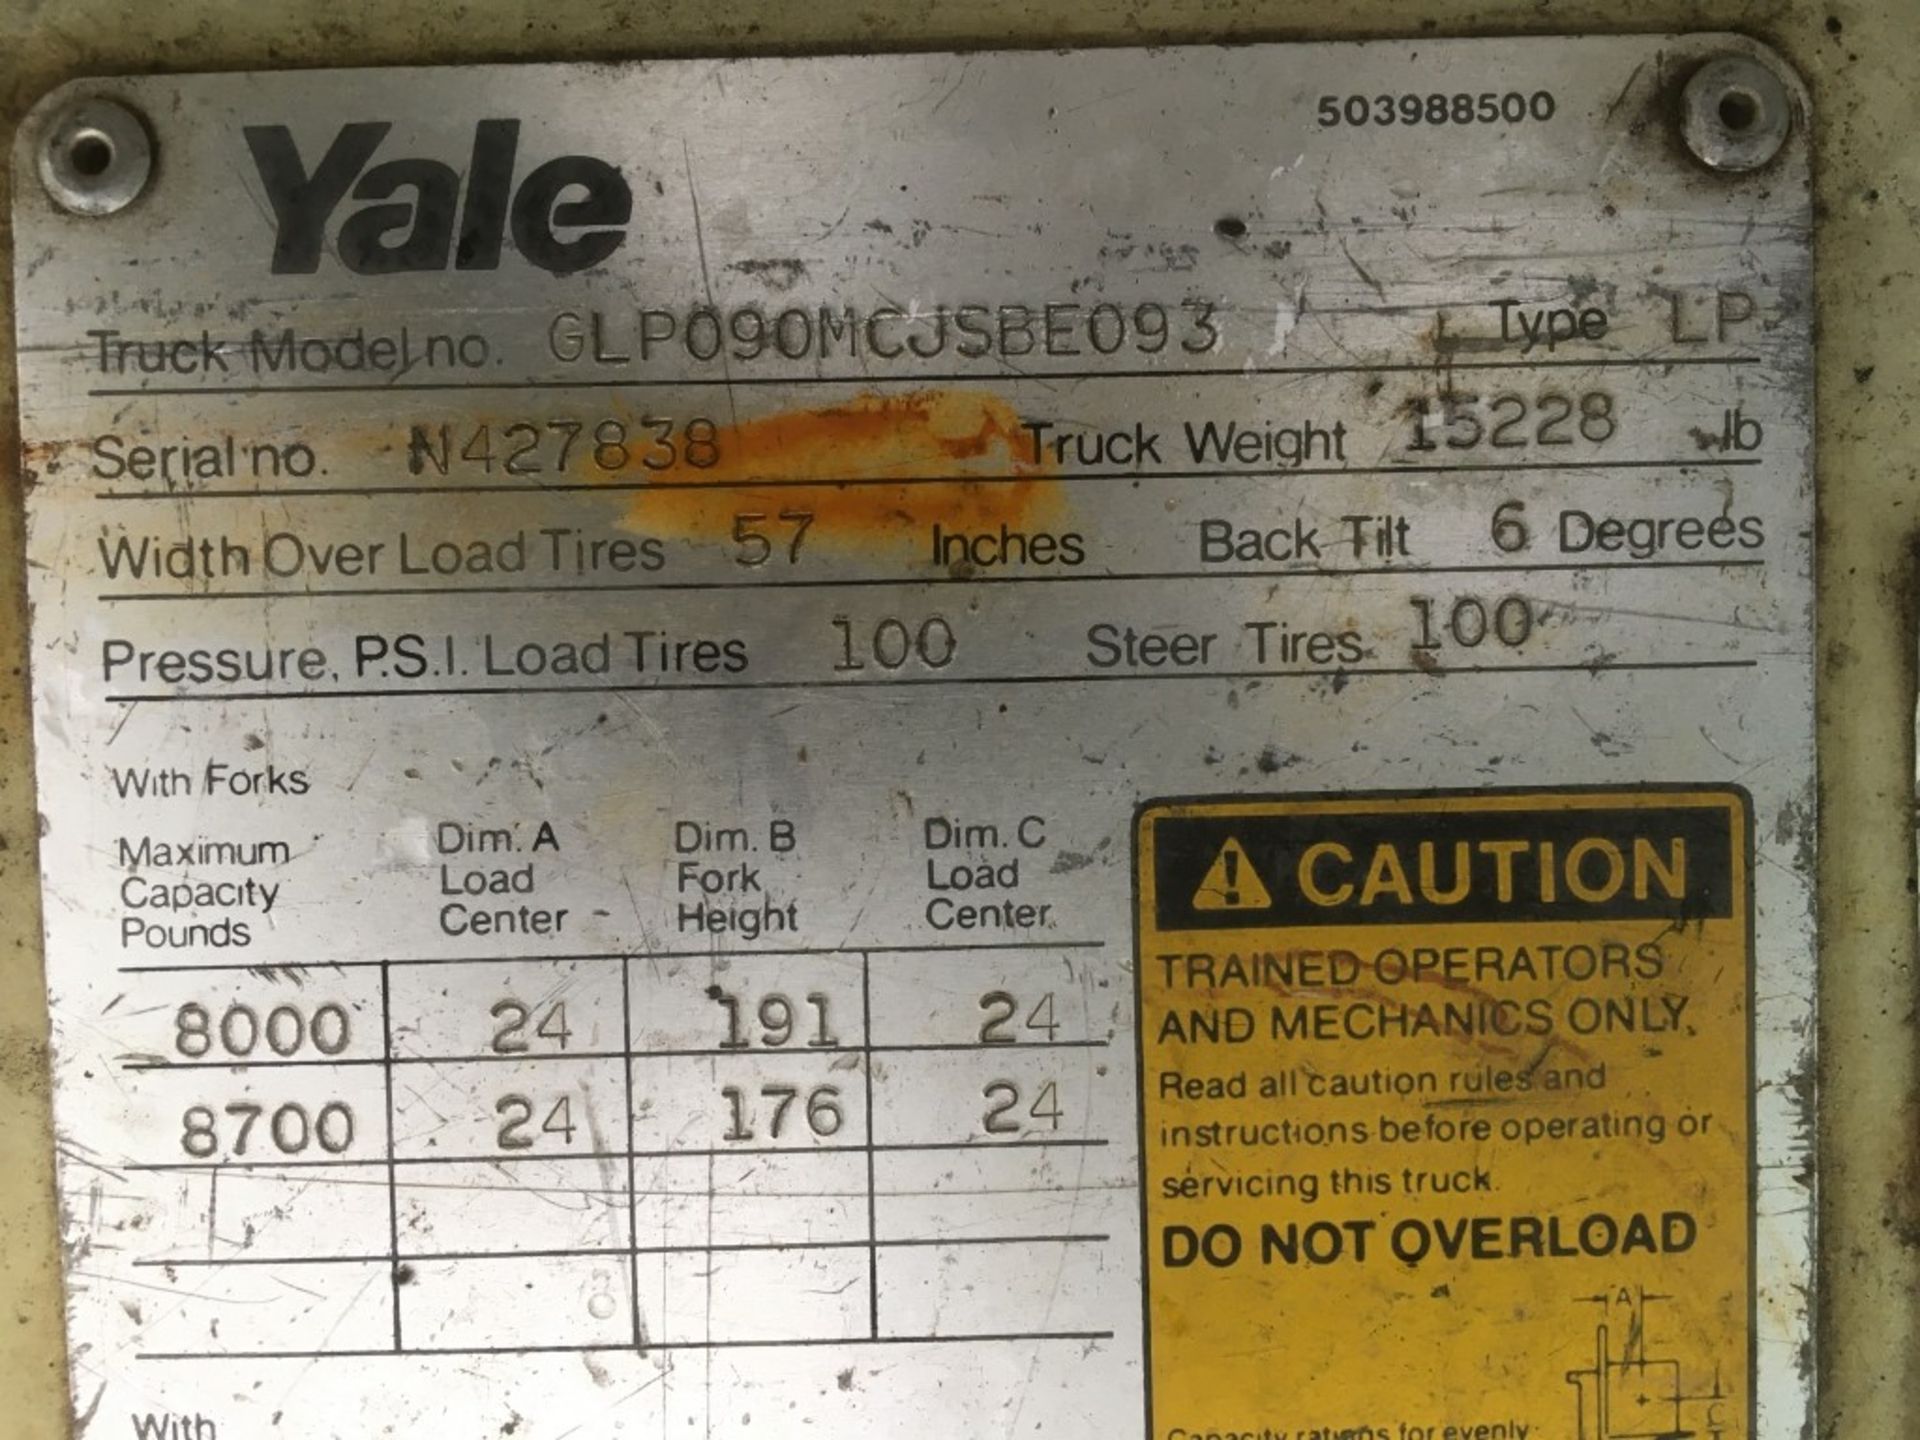 1986 Yale NGLP090 Forklift - Image 9 of 14